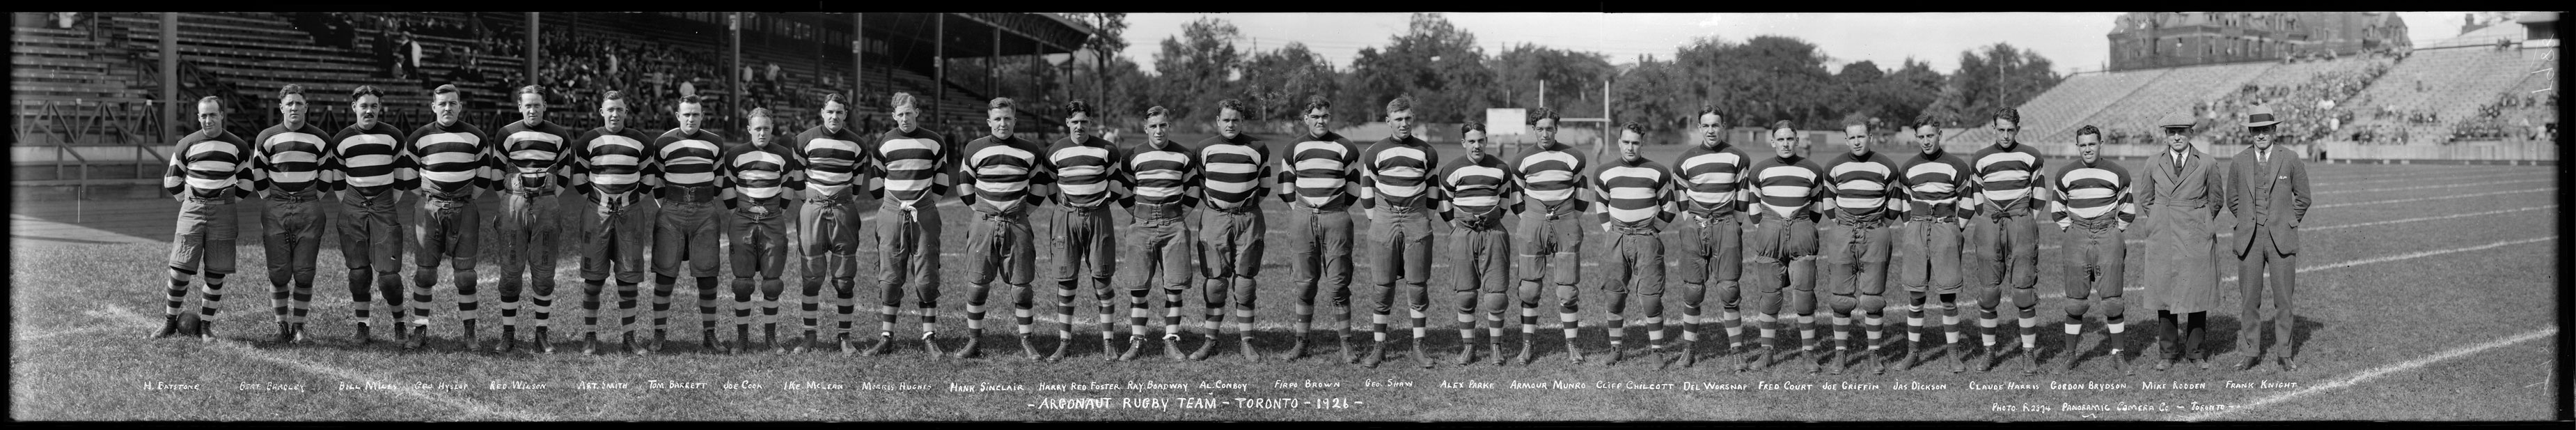 Équipe de rugby, les Argonauts – Stade Varsity, Toronto, 1926